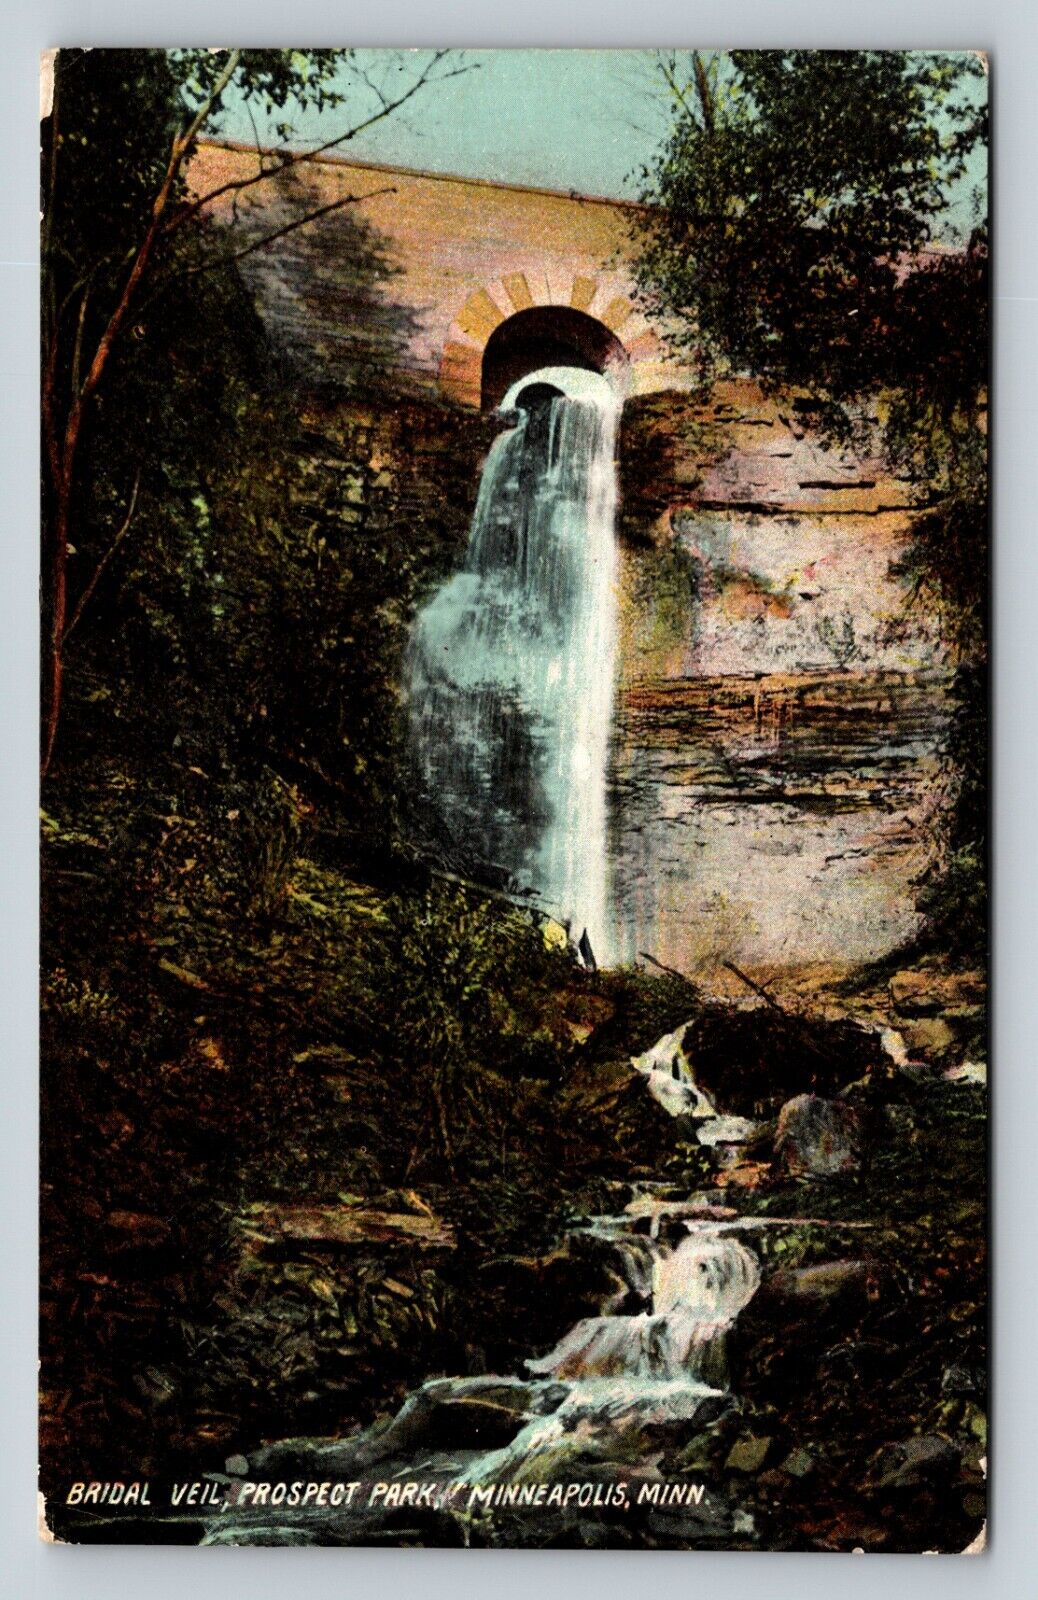 Prospect Park Bridal Veil Waterfall Minneapolis Minnesota MN VINTAGE Postcard